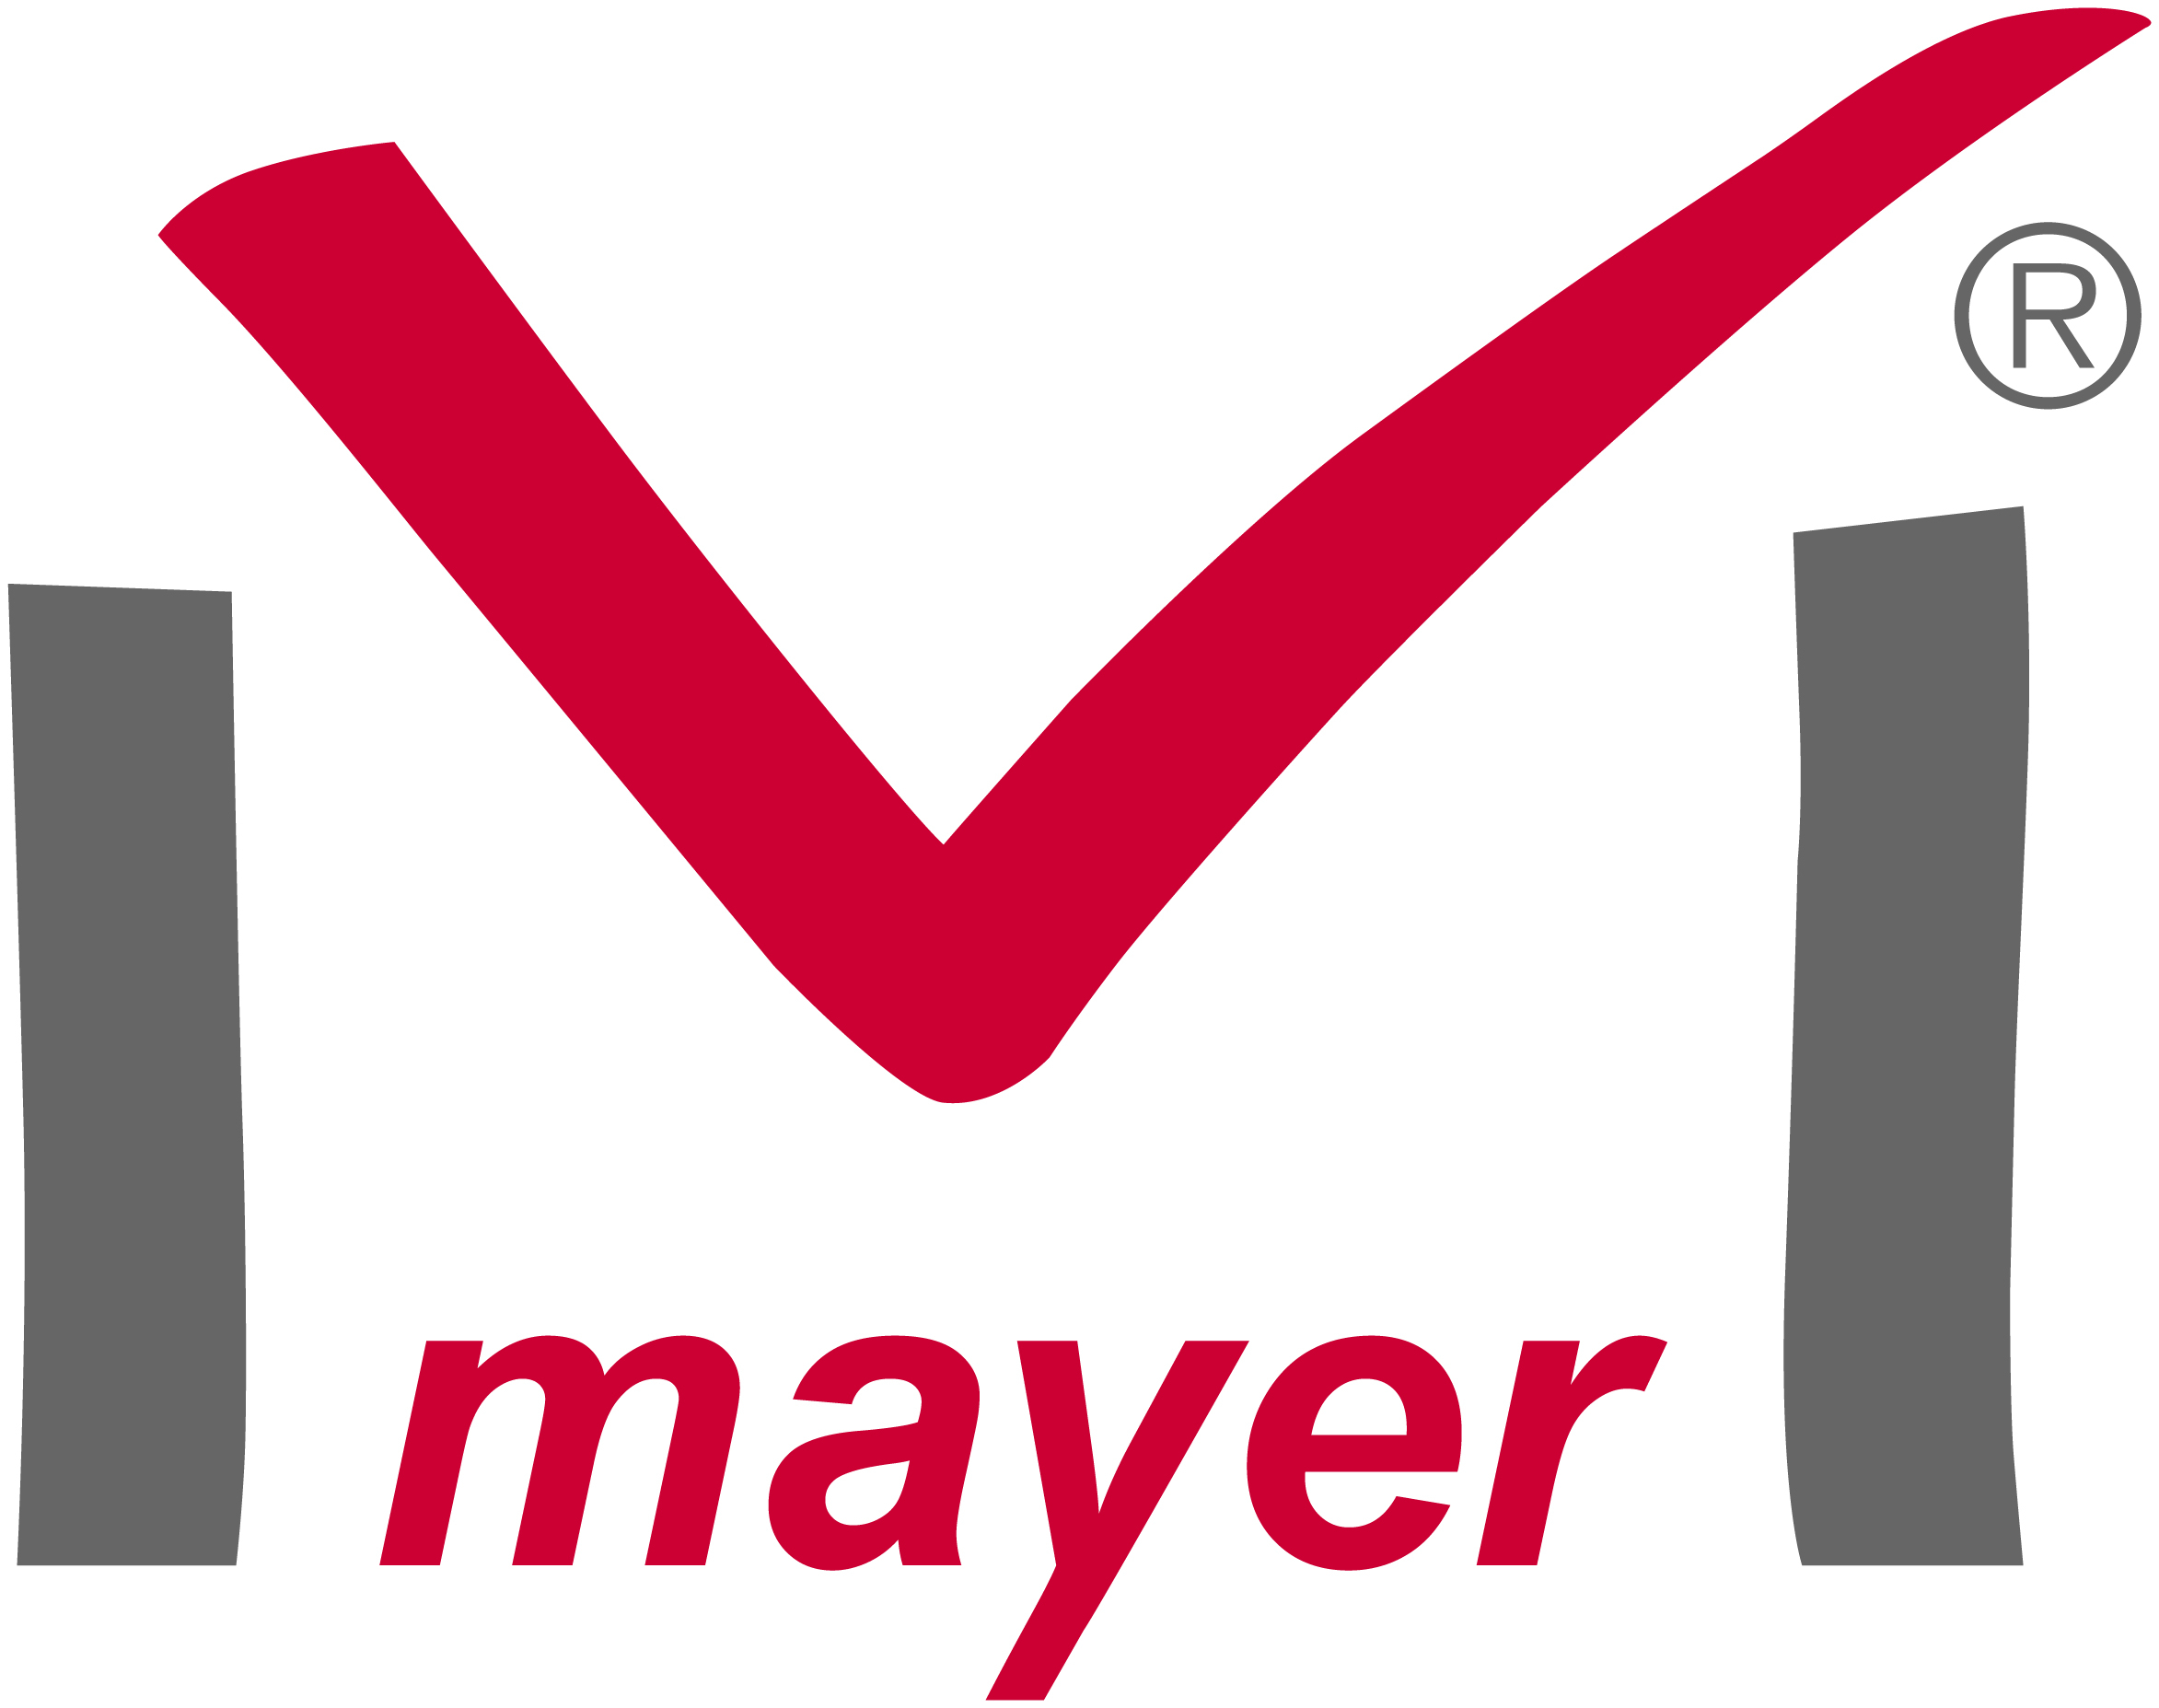 Logo Mayer-Kuvert-network